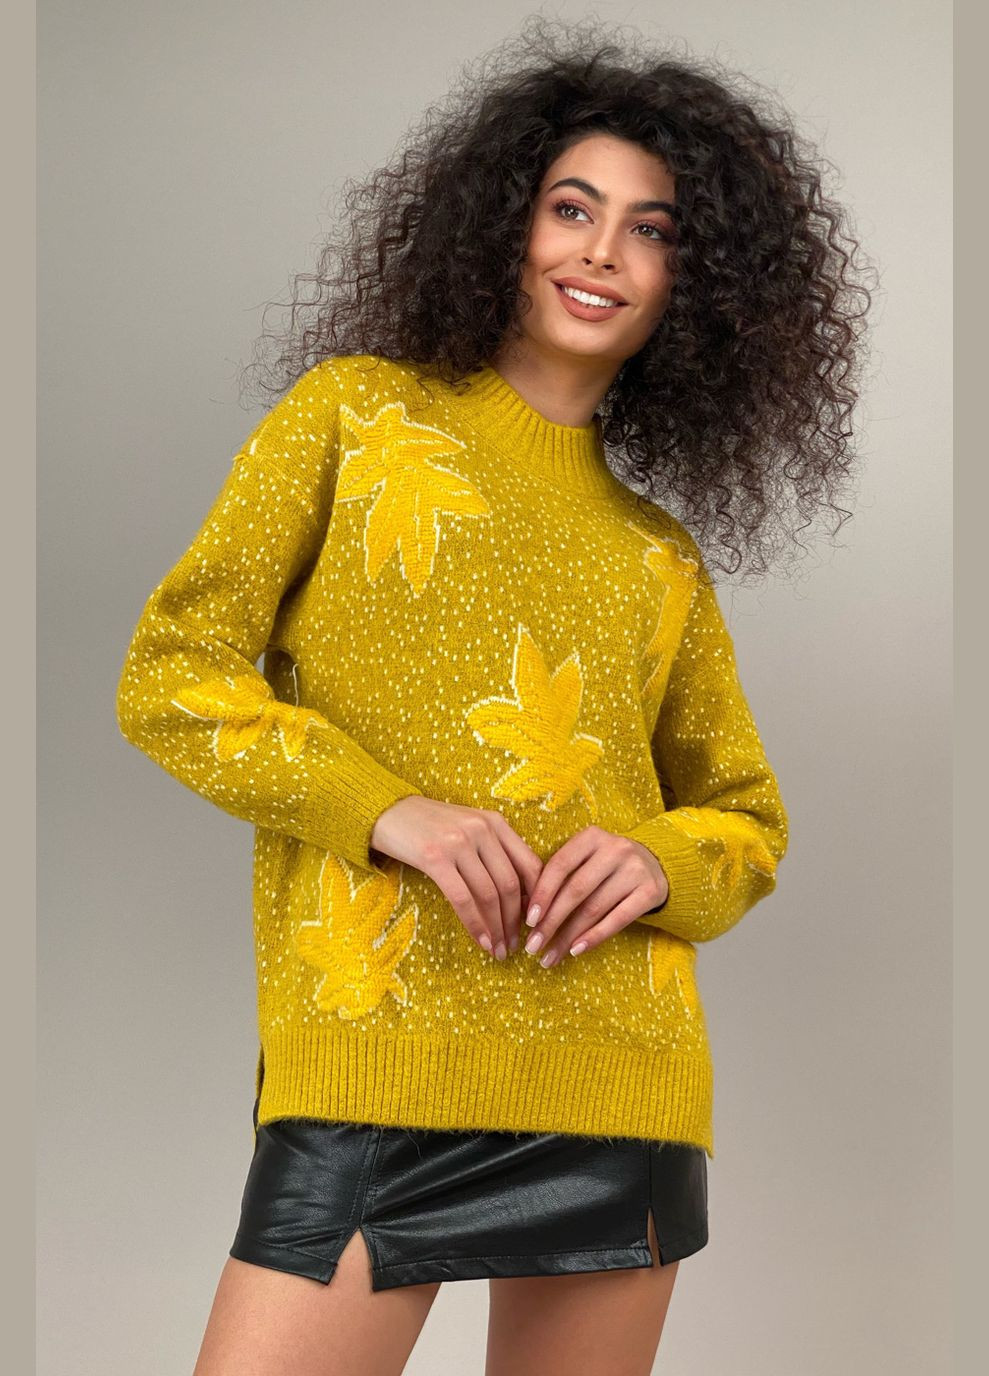 Жовтий зимовий светр з листям CHICLY